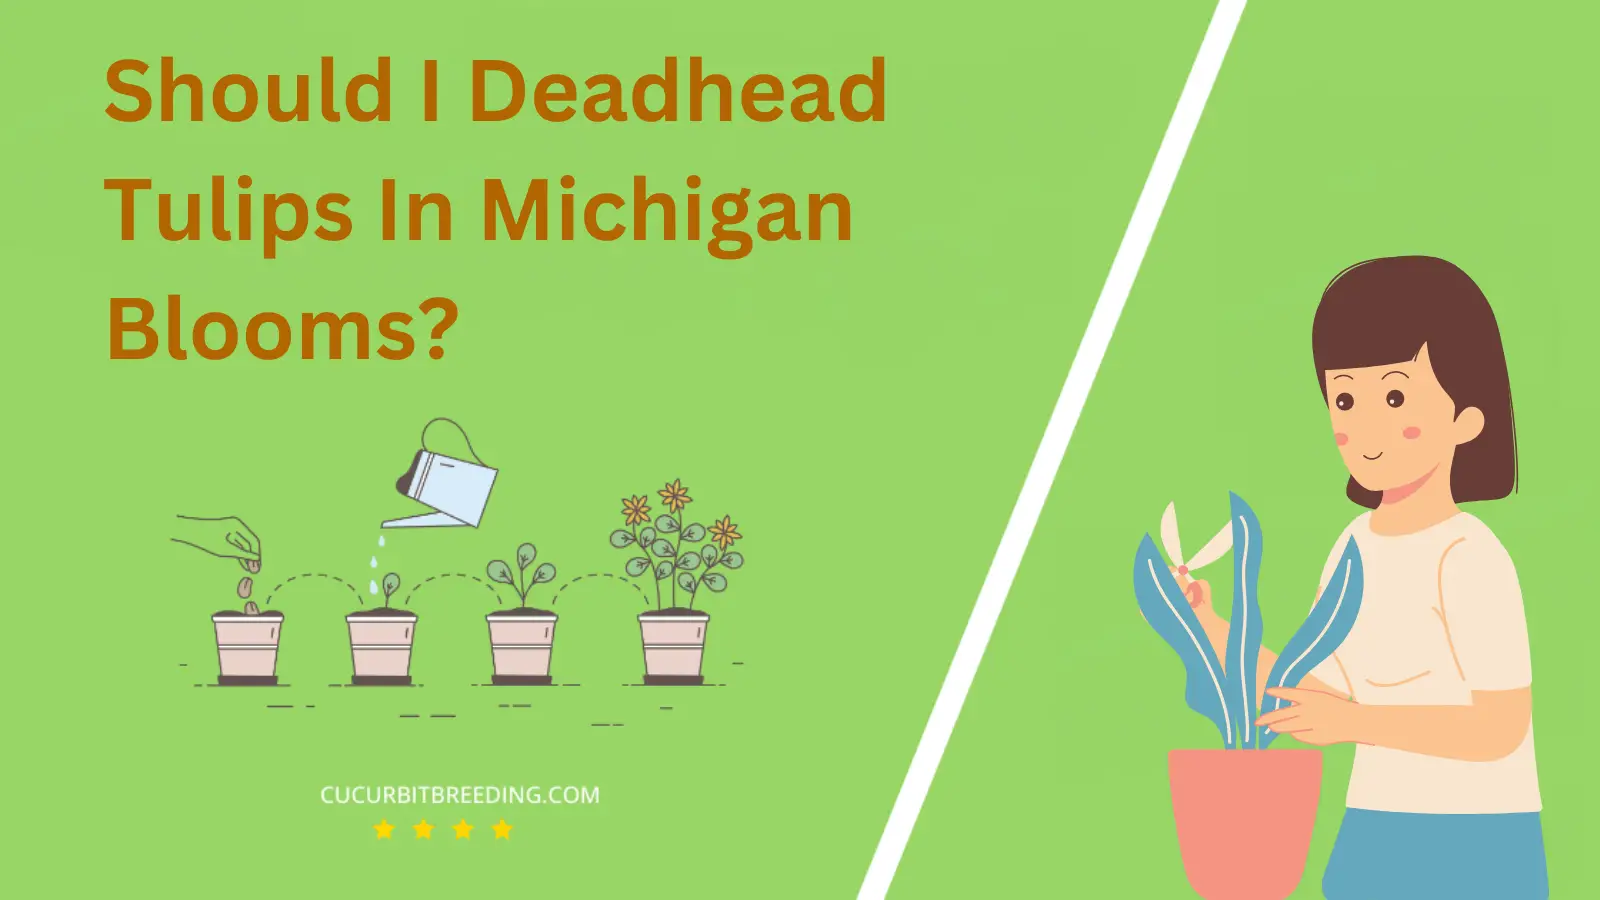 Should I Deadhead Tulips In Michigan Blooms?